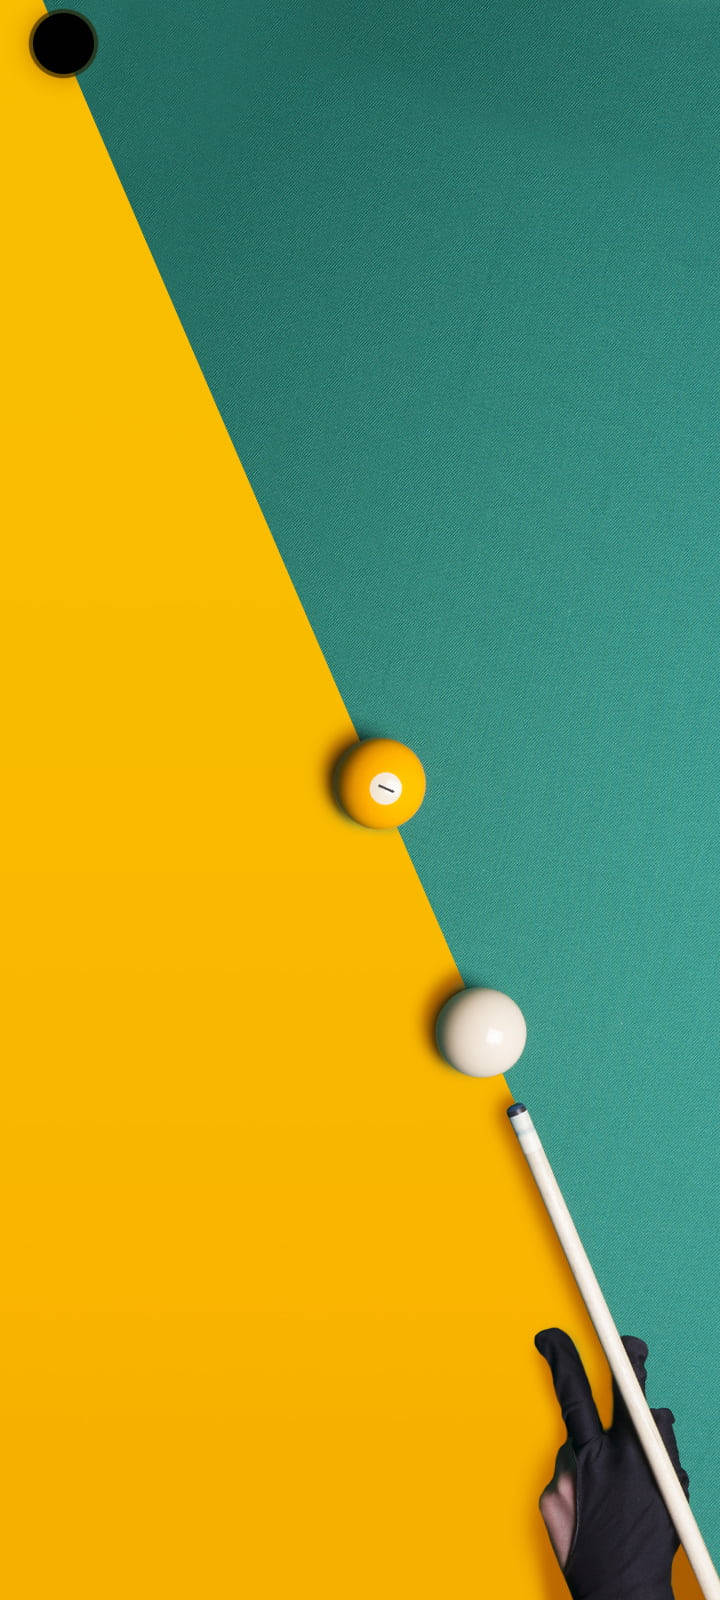 Dot Notch Billiard Balls Background